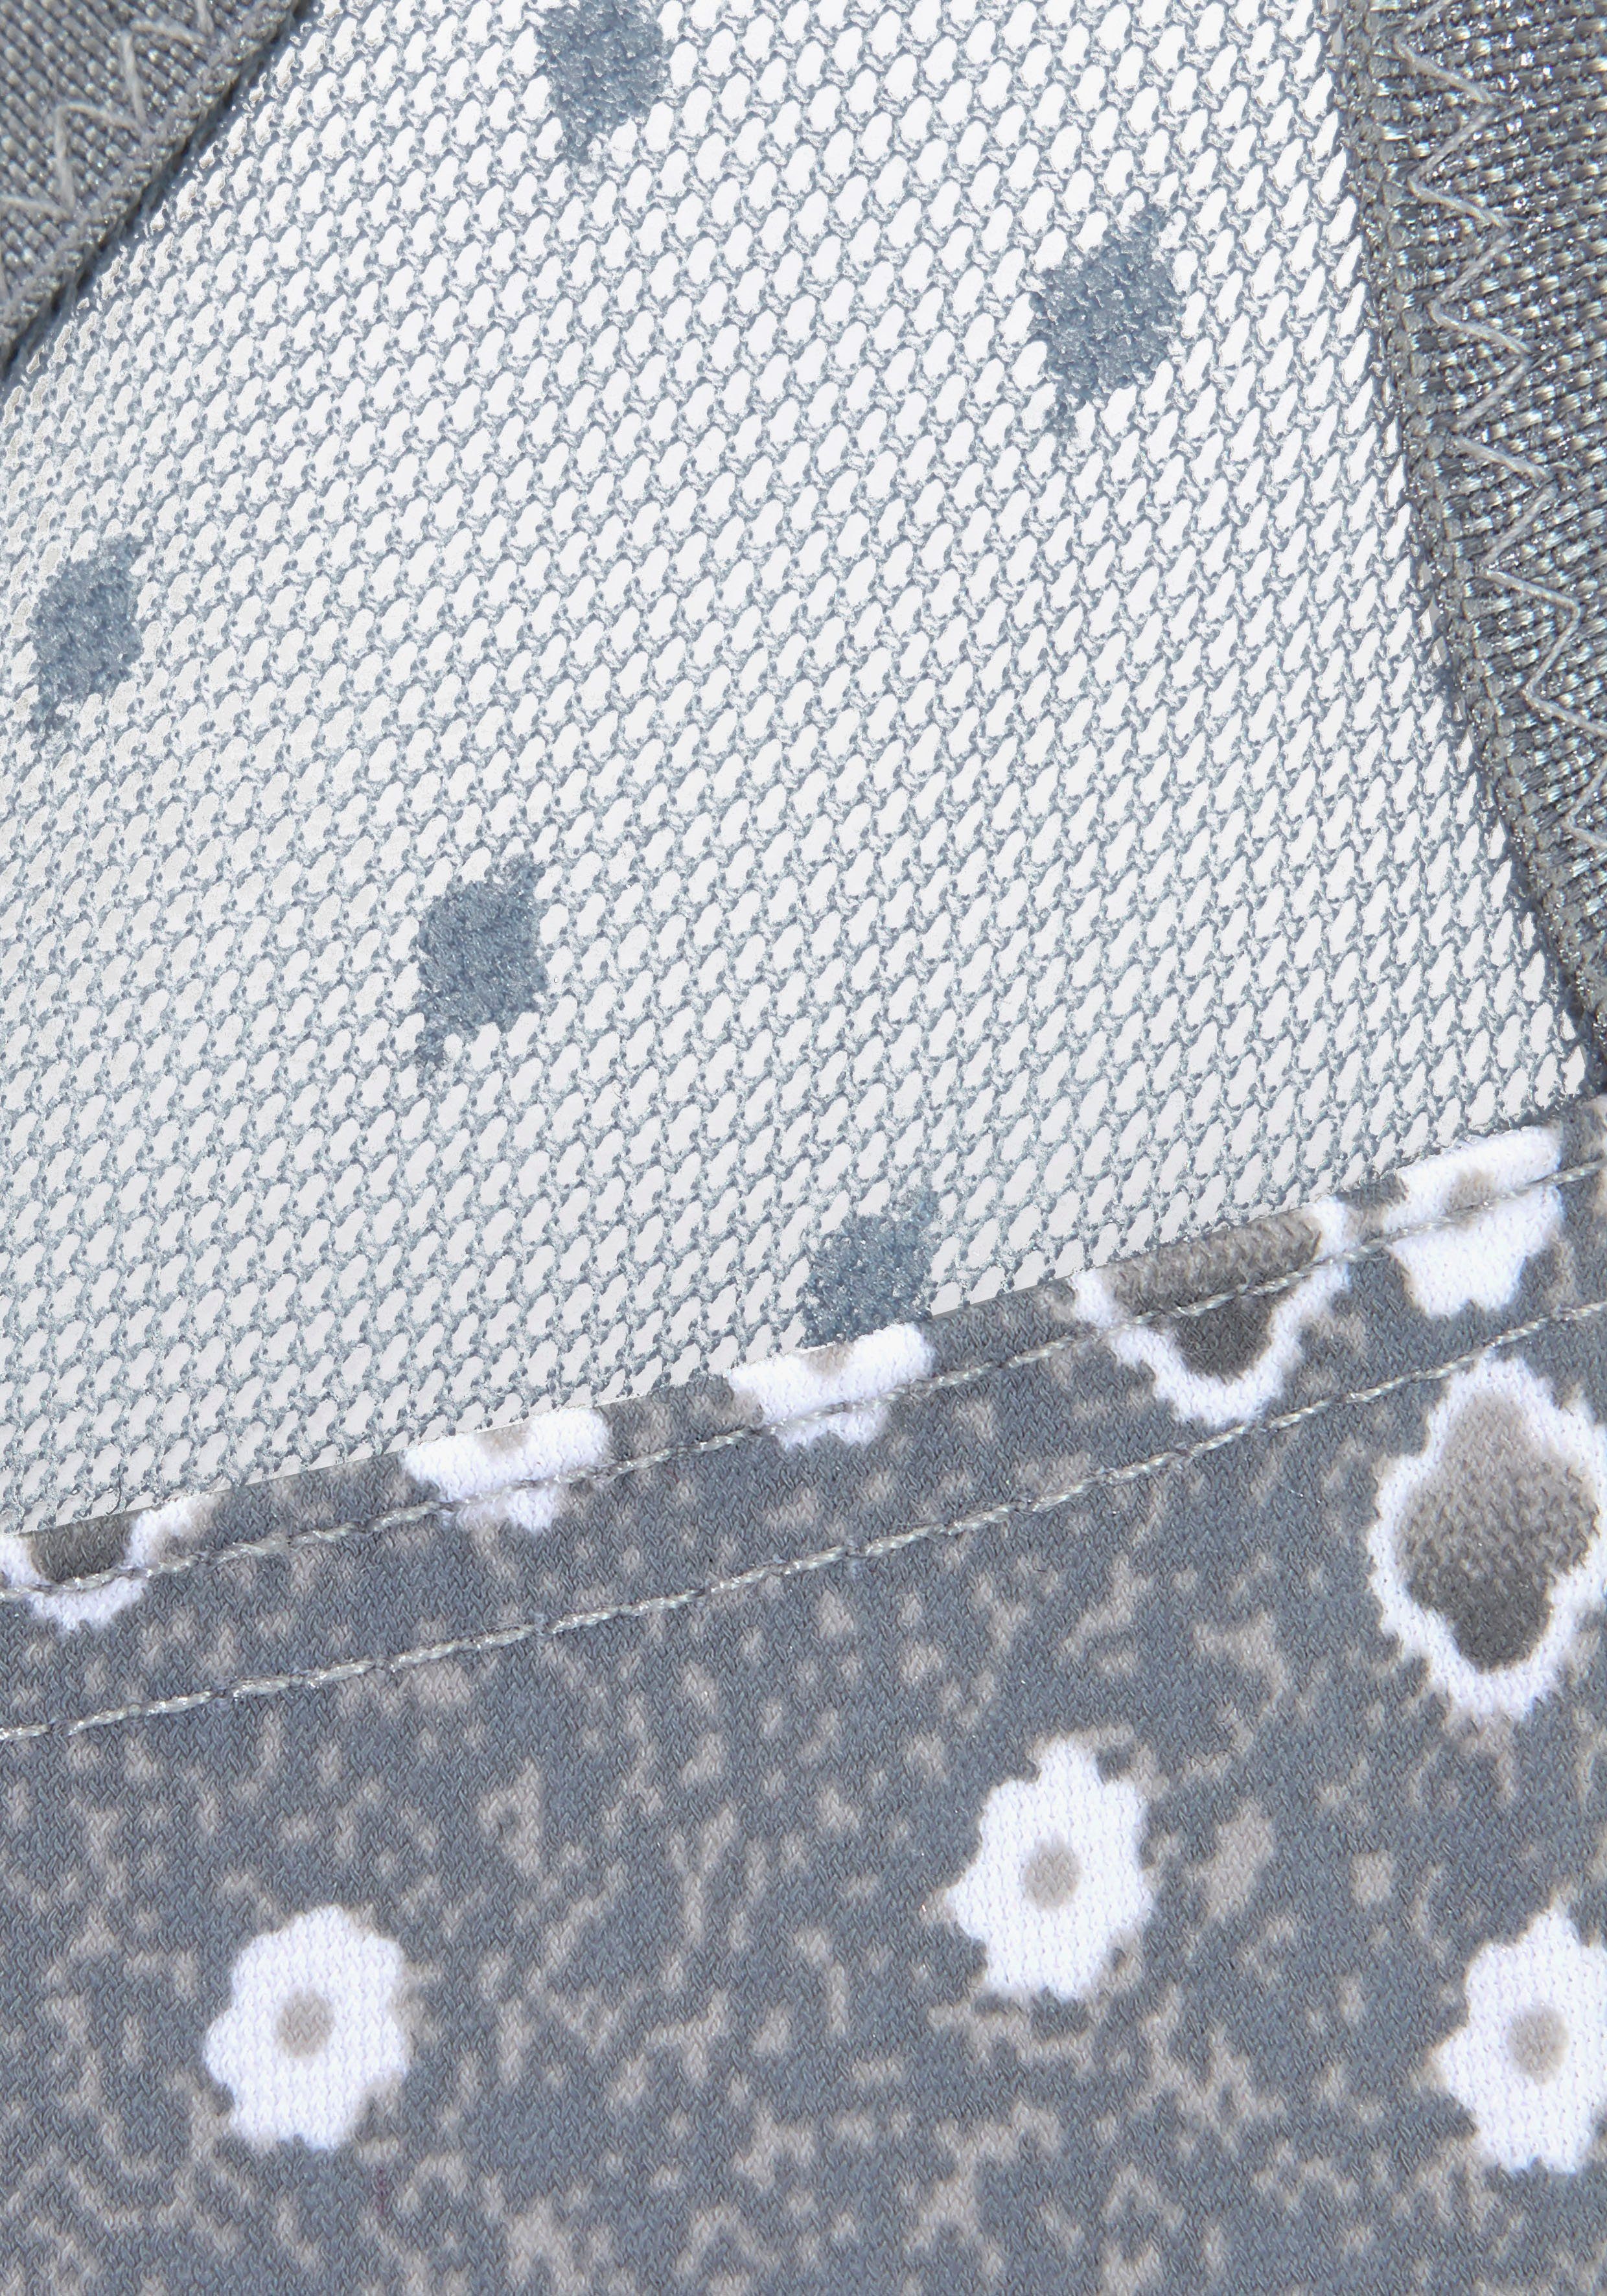 Bügel mit Obercup, leicht Basic und Minimizer-BH transparentem grau-bedruckt Dessous Nuance Tüll im